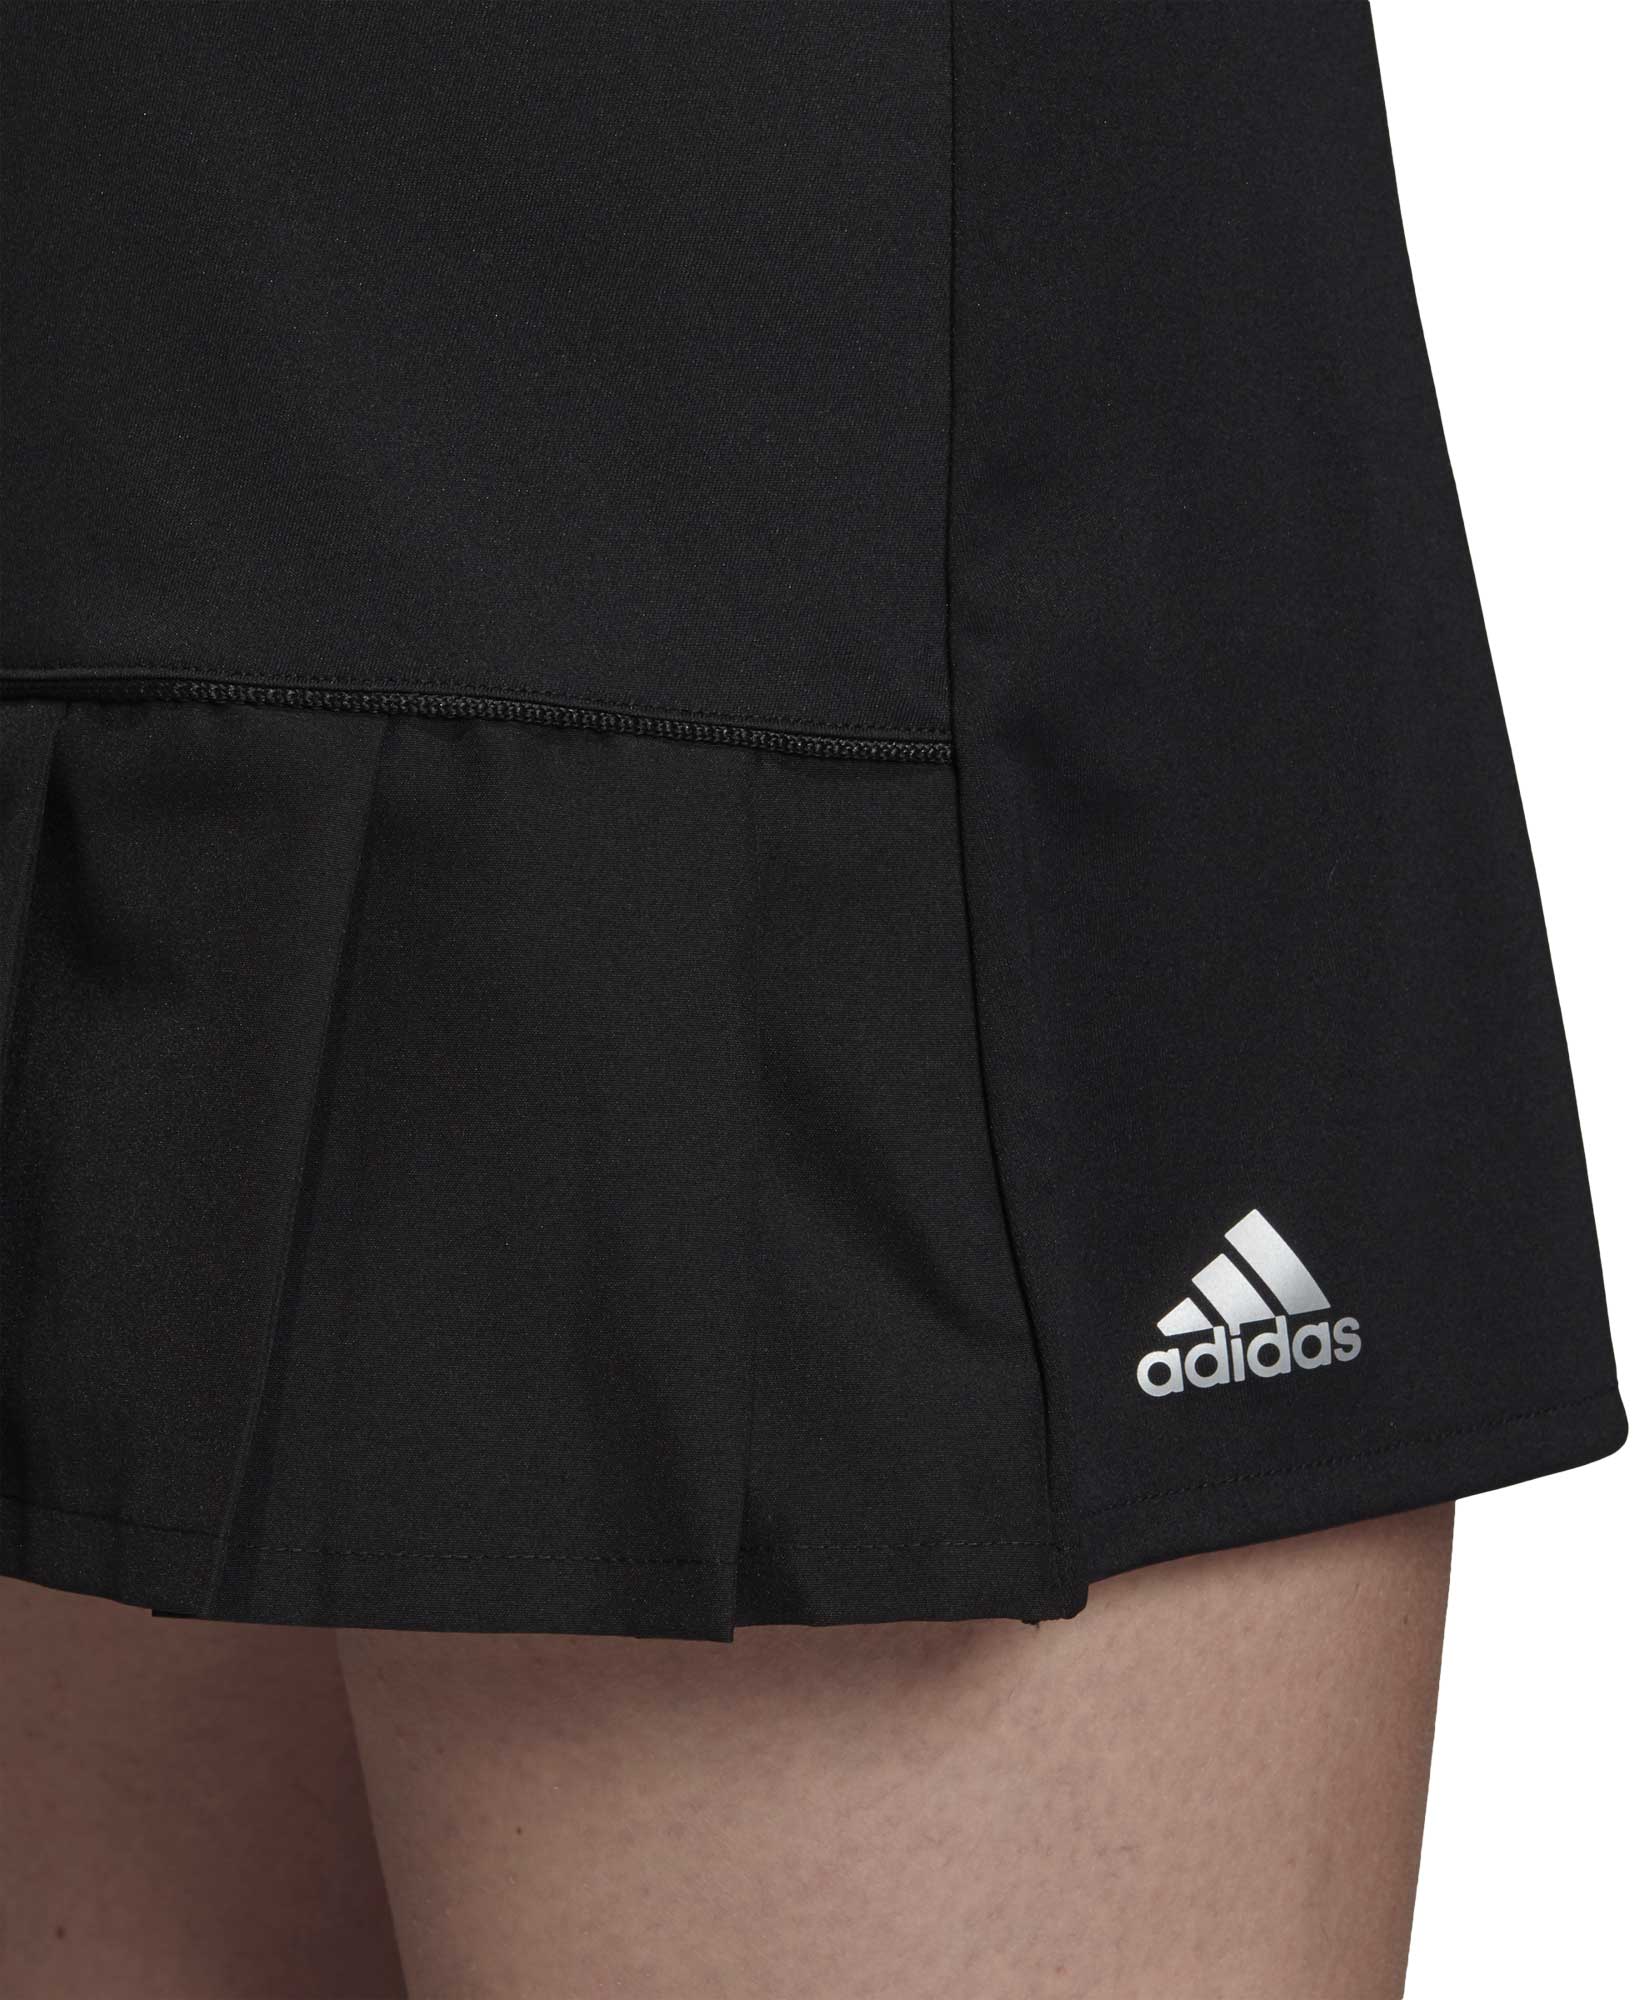 Women's sports skirt